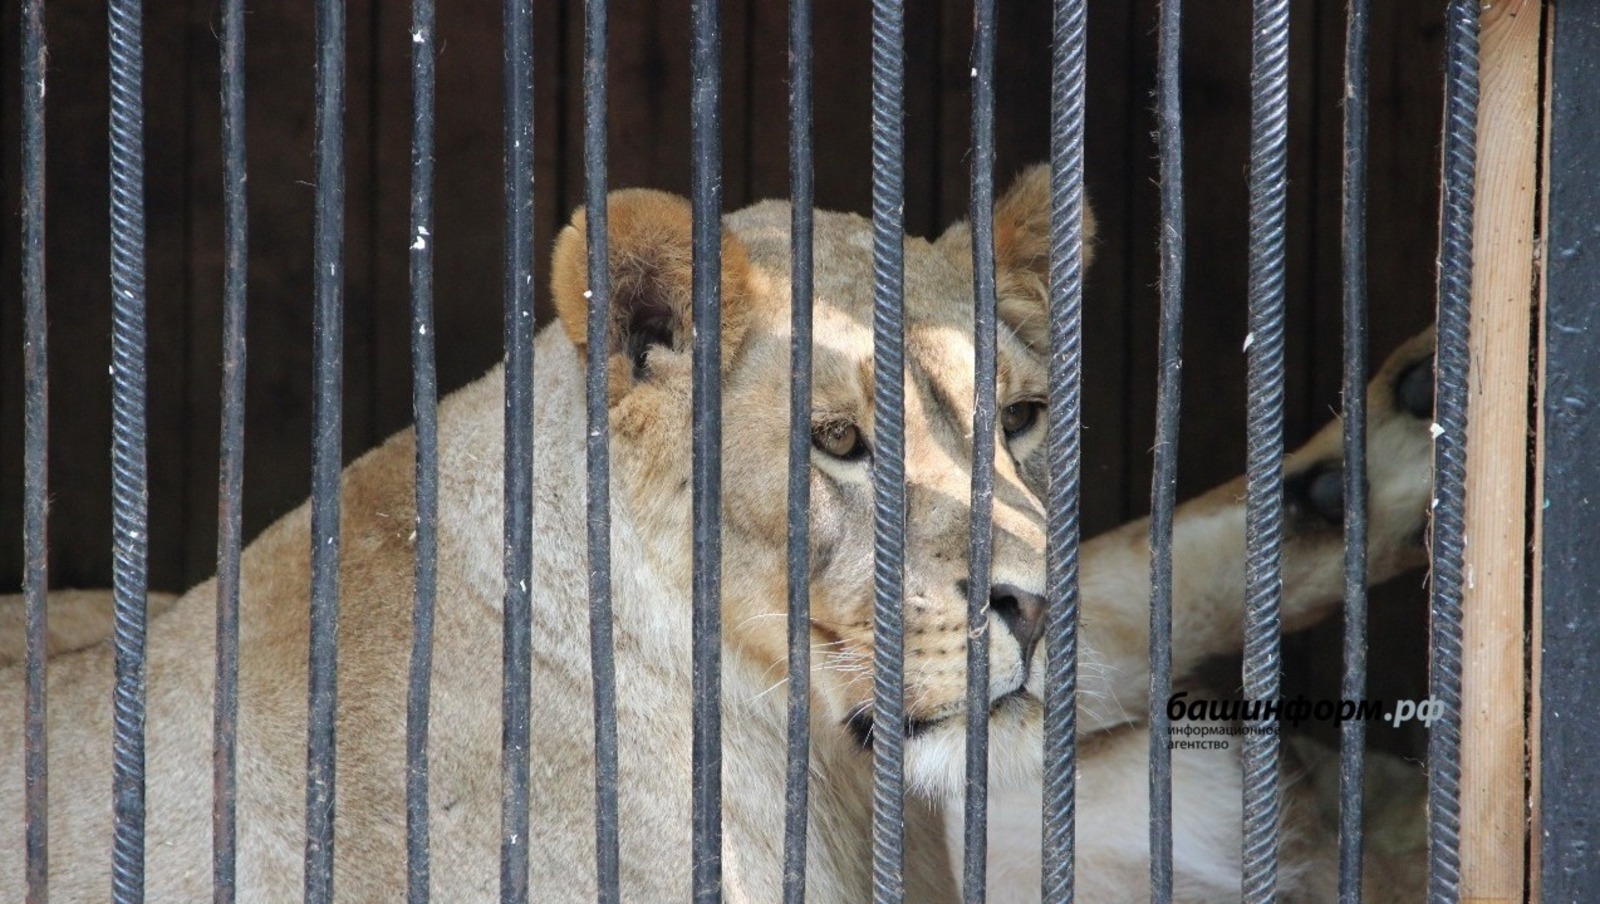 Звери били. Зоопарк Саванна в Уфе. Последние новости про нового животного Липецкого зоопарка.